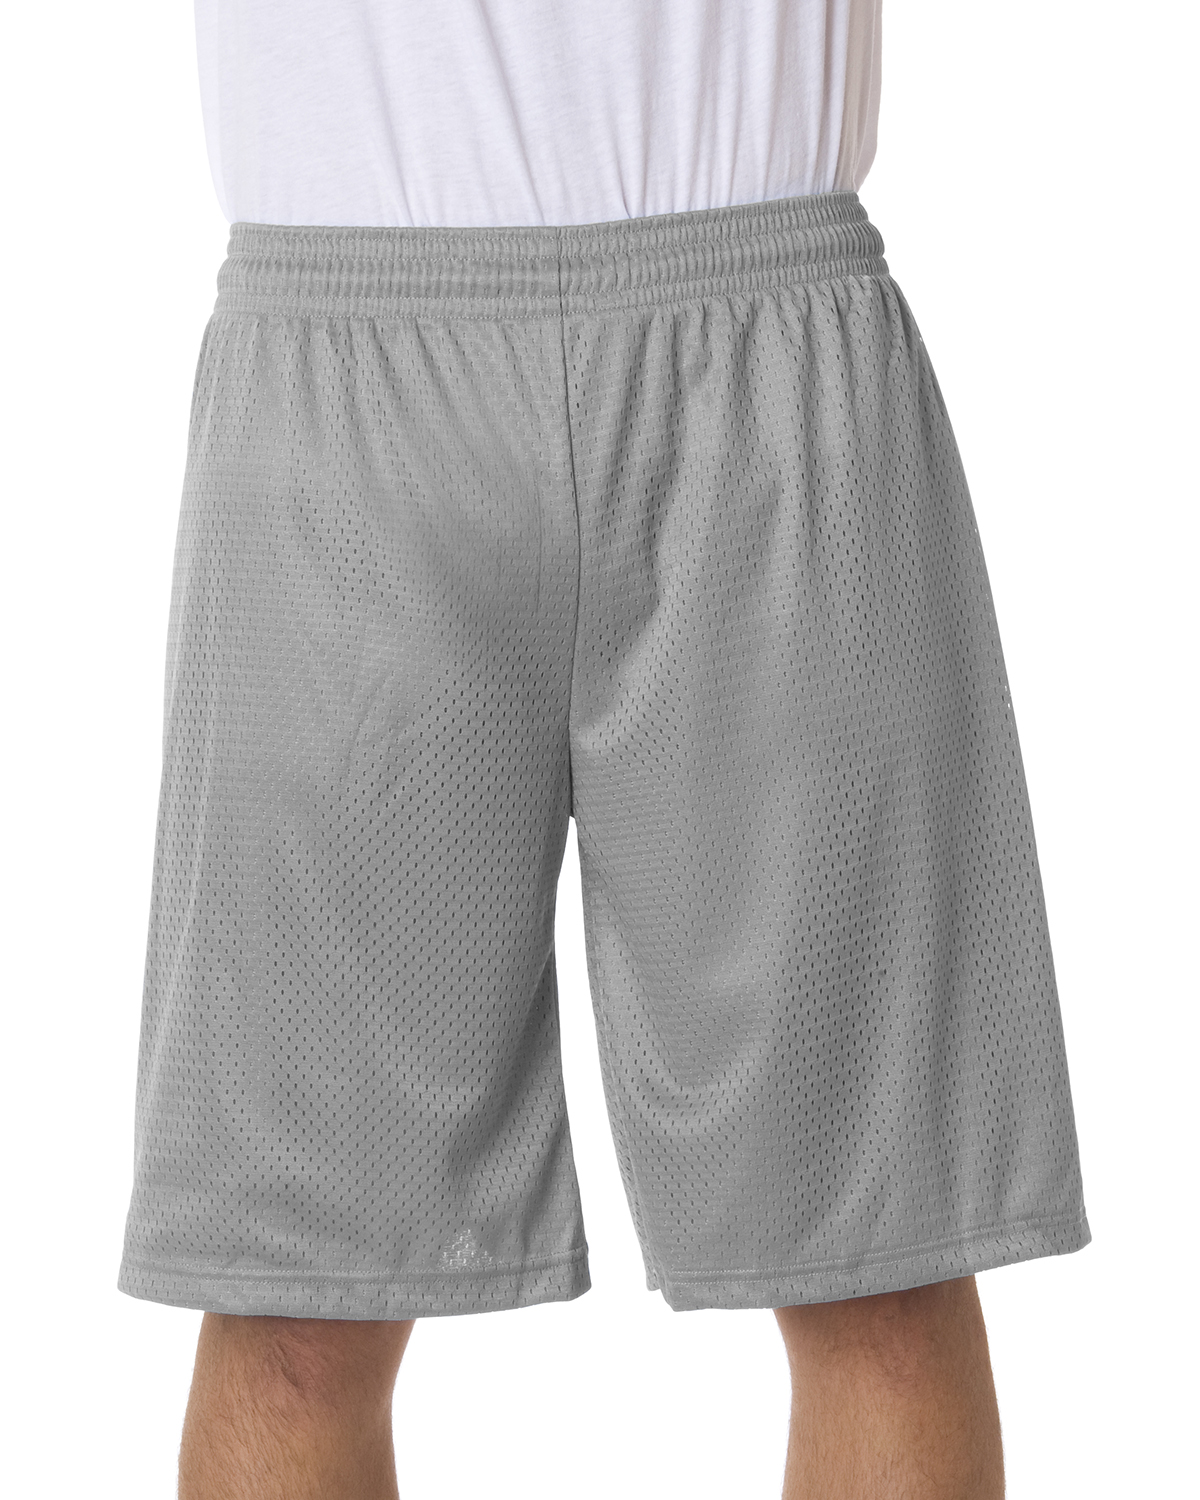 Badger Sport B7211 - Adult Mesh/Tricot 11" Shorts